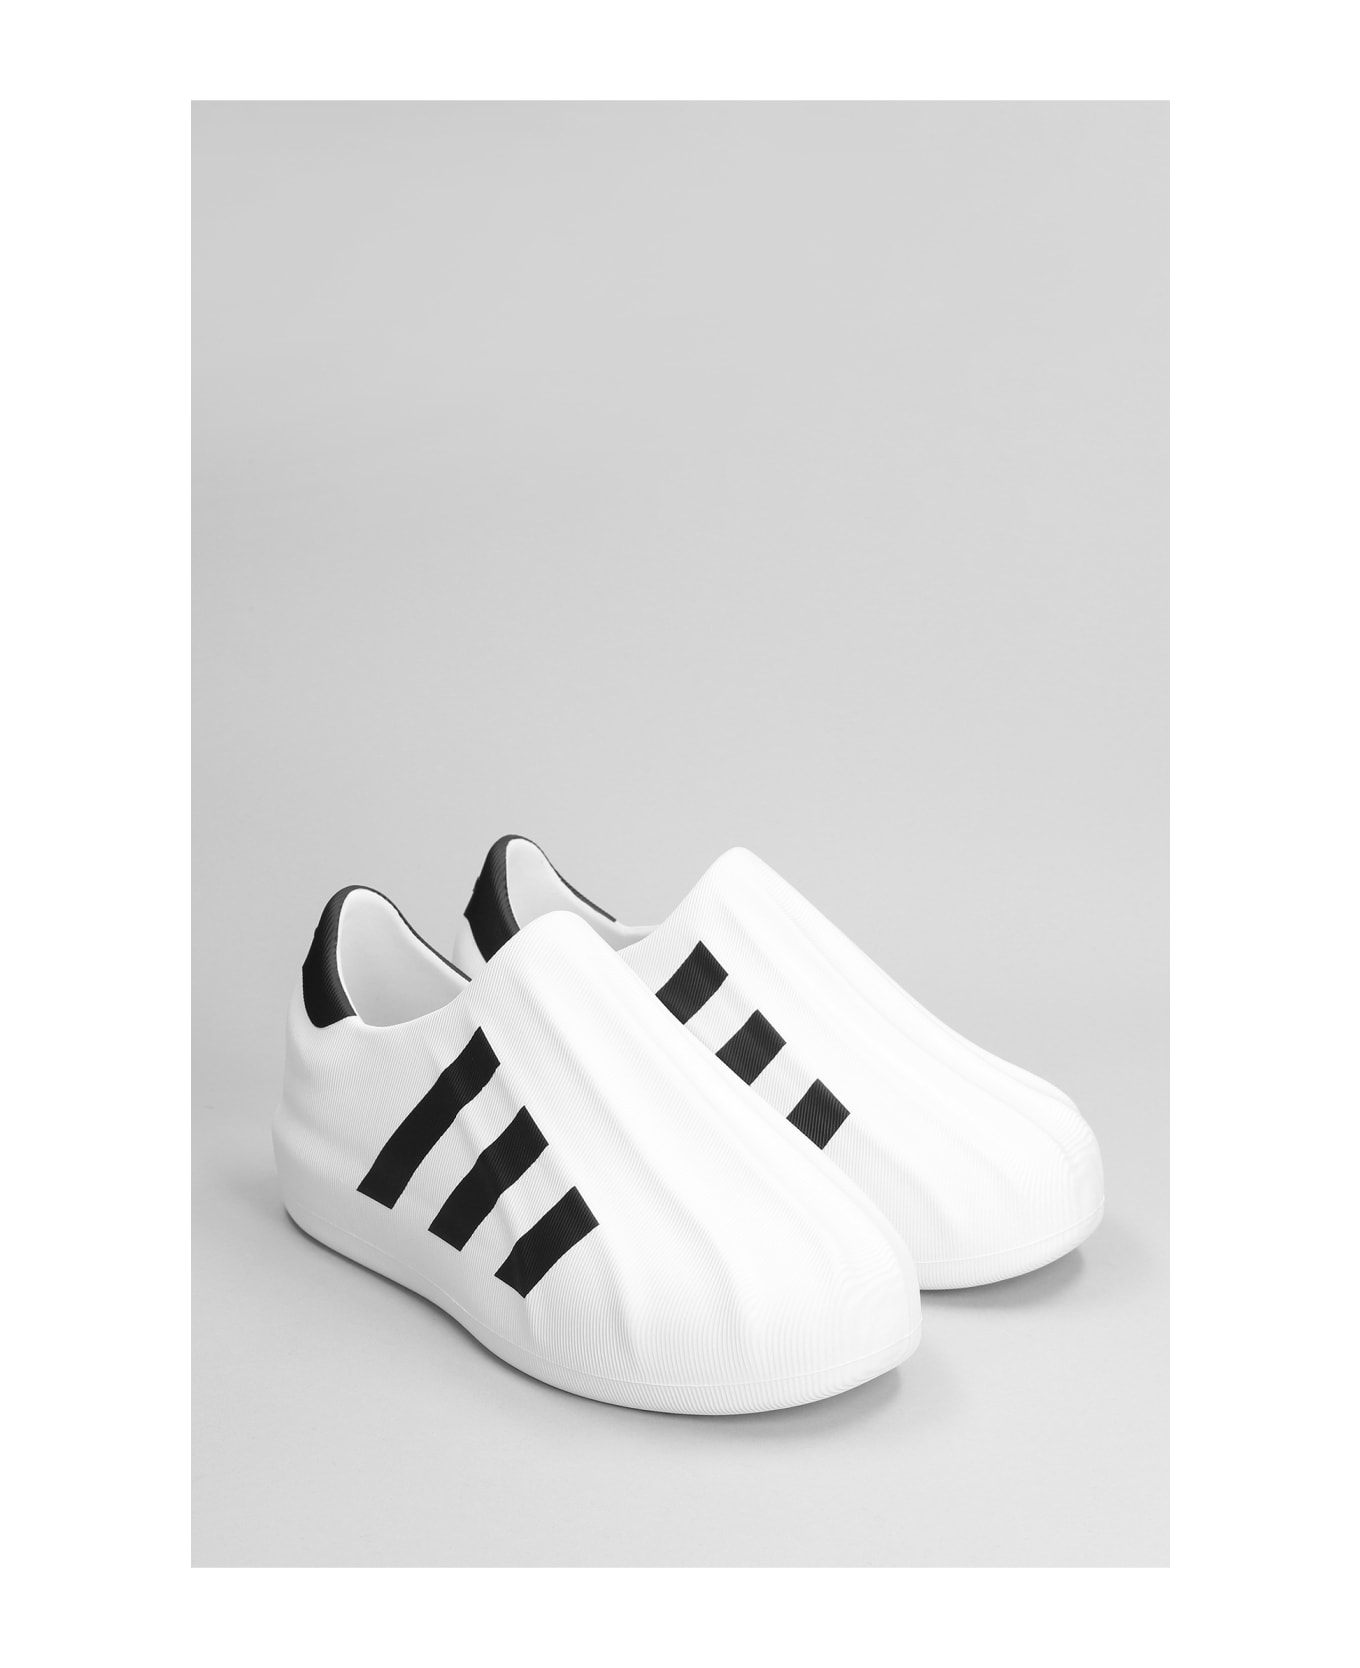 Adidas Adifom Superstar Sneakers In White Pvc - Cwhite Cblack Cblack